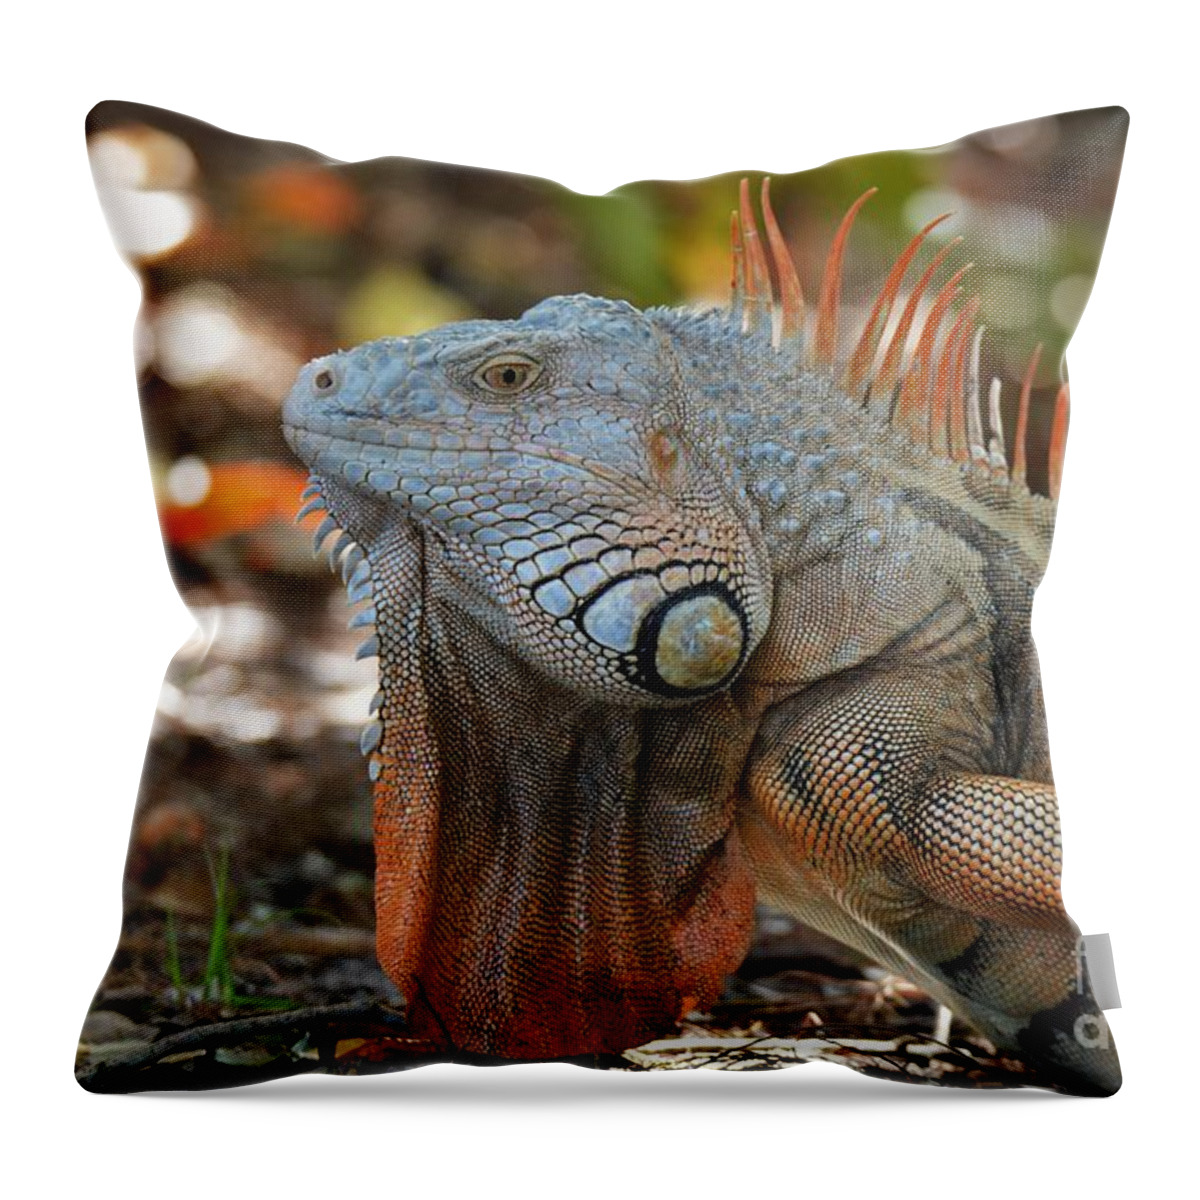 Orange Iguana Throw Pillow featuring the photograph Iguana by Julie Adair